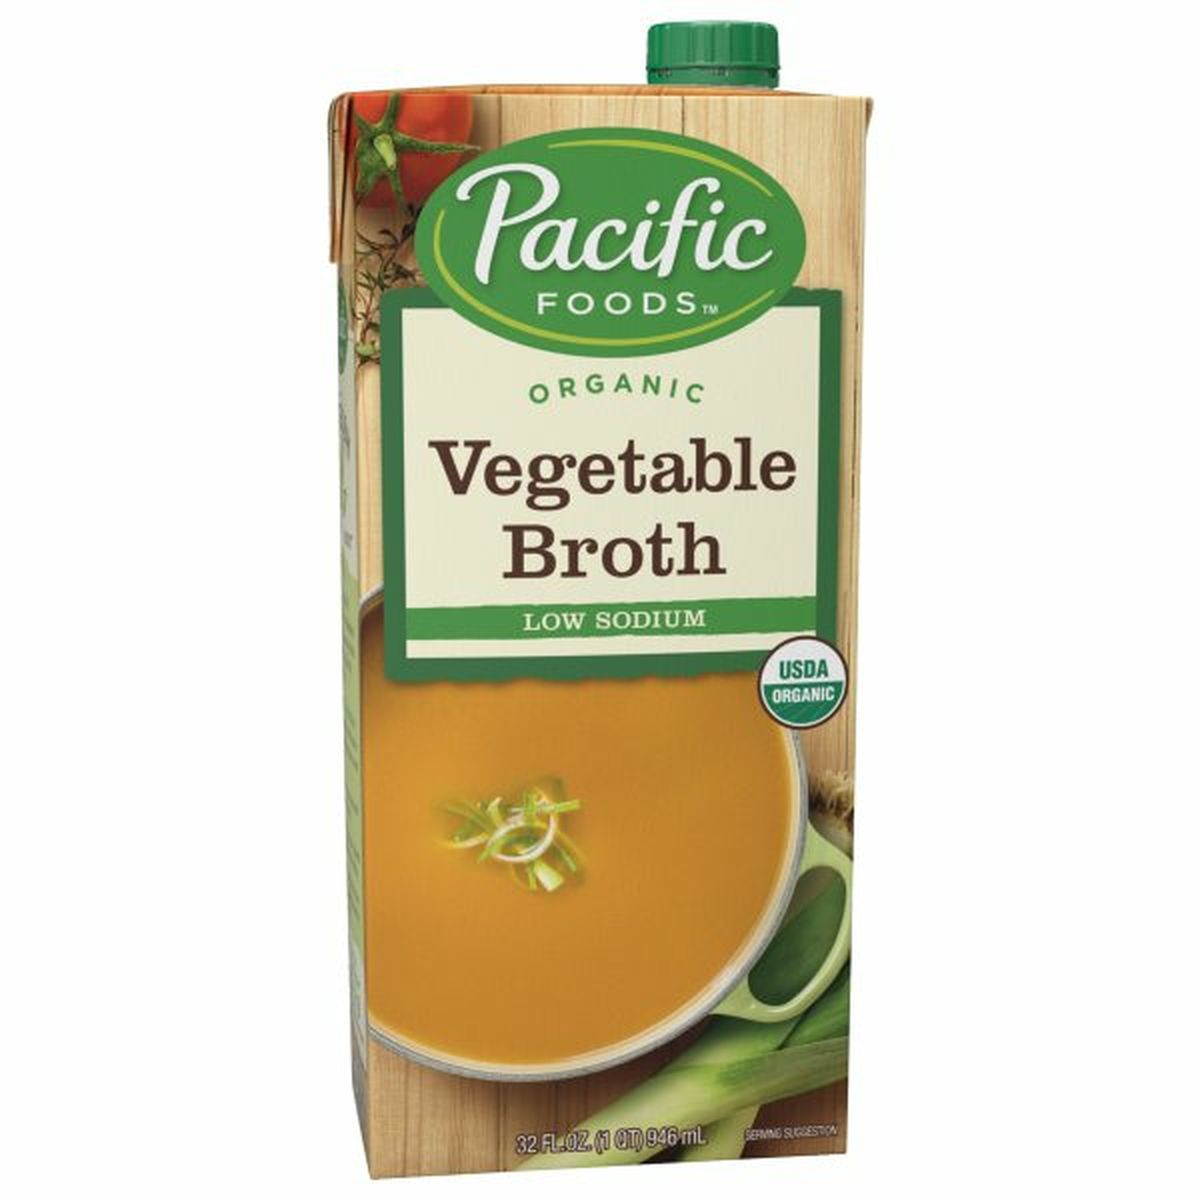 Calories in Pacific Vegetable Broth, Organic, Low Sodium